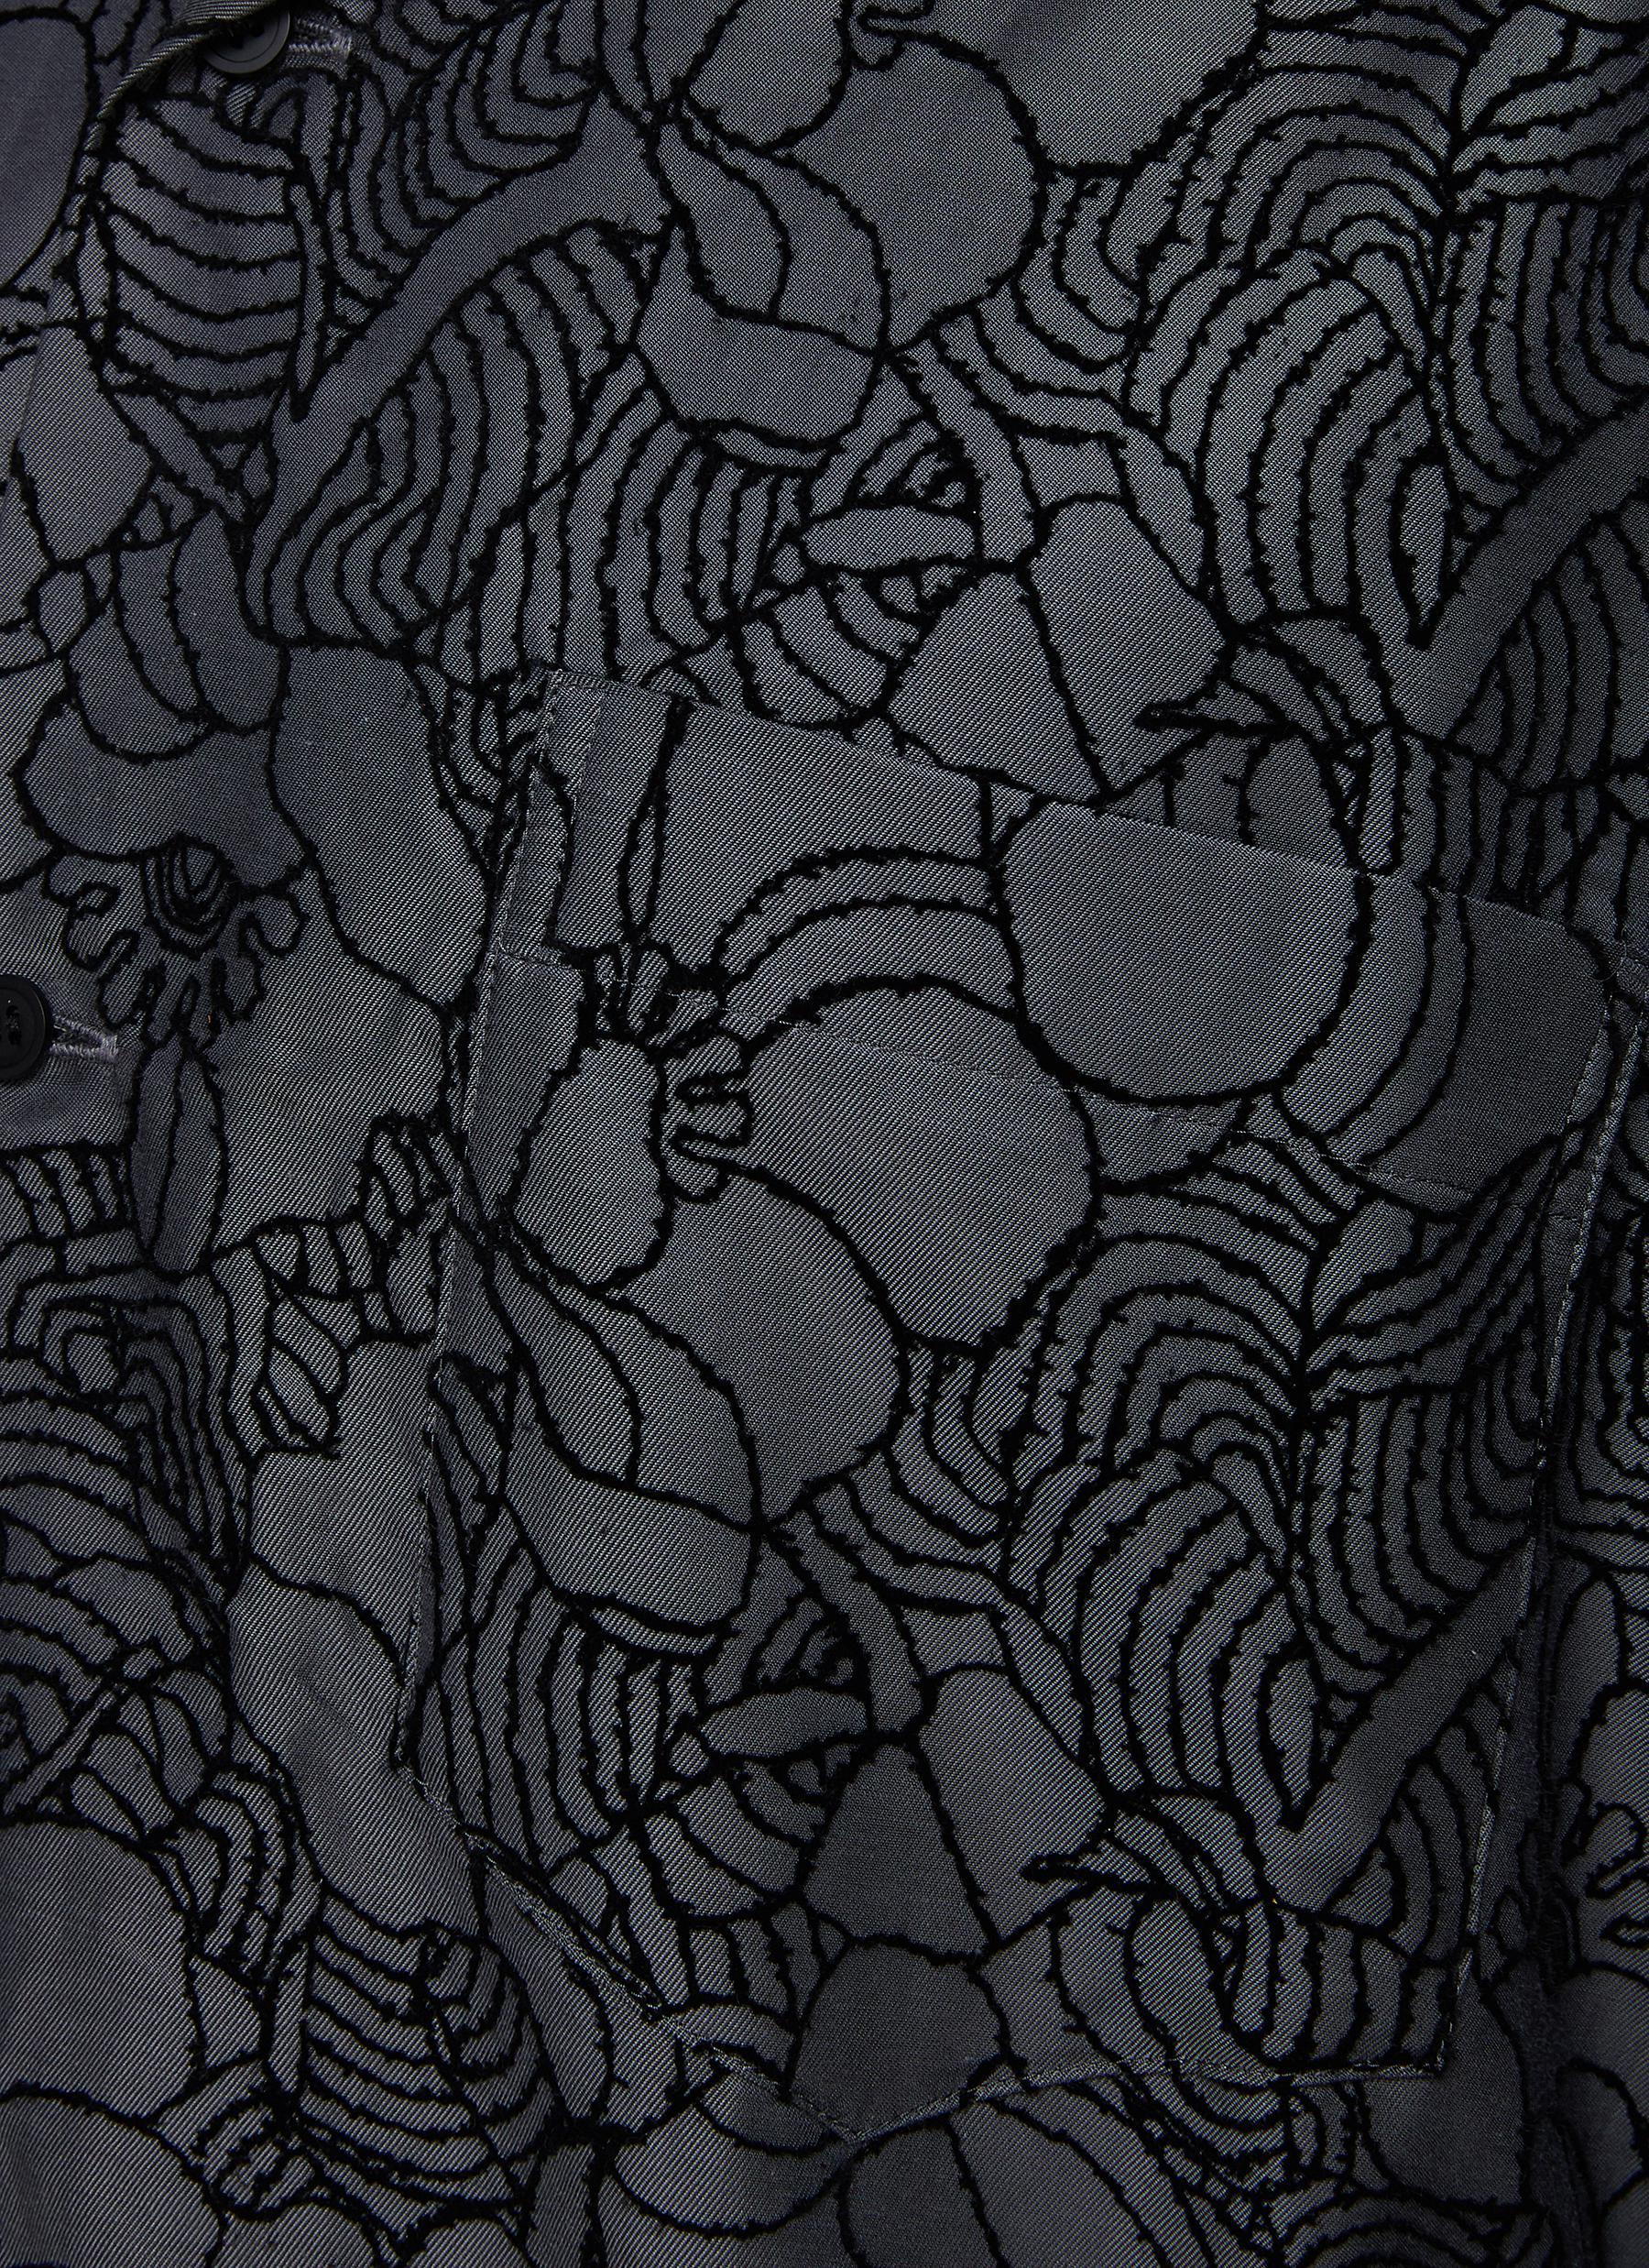 TOGA VIRILIS, Flocked Floral Print Shirt, Men